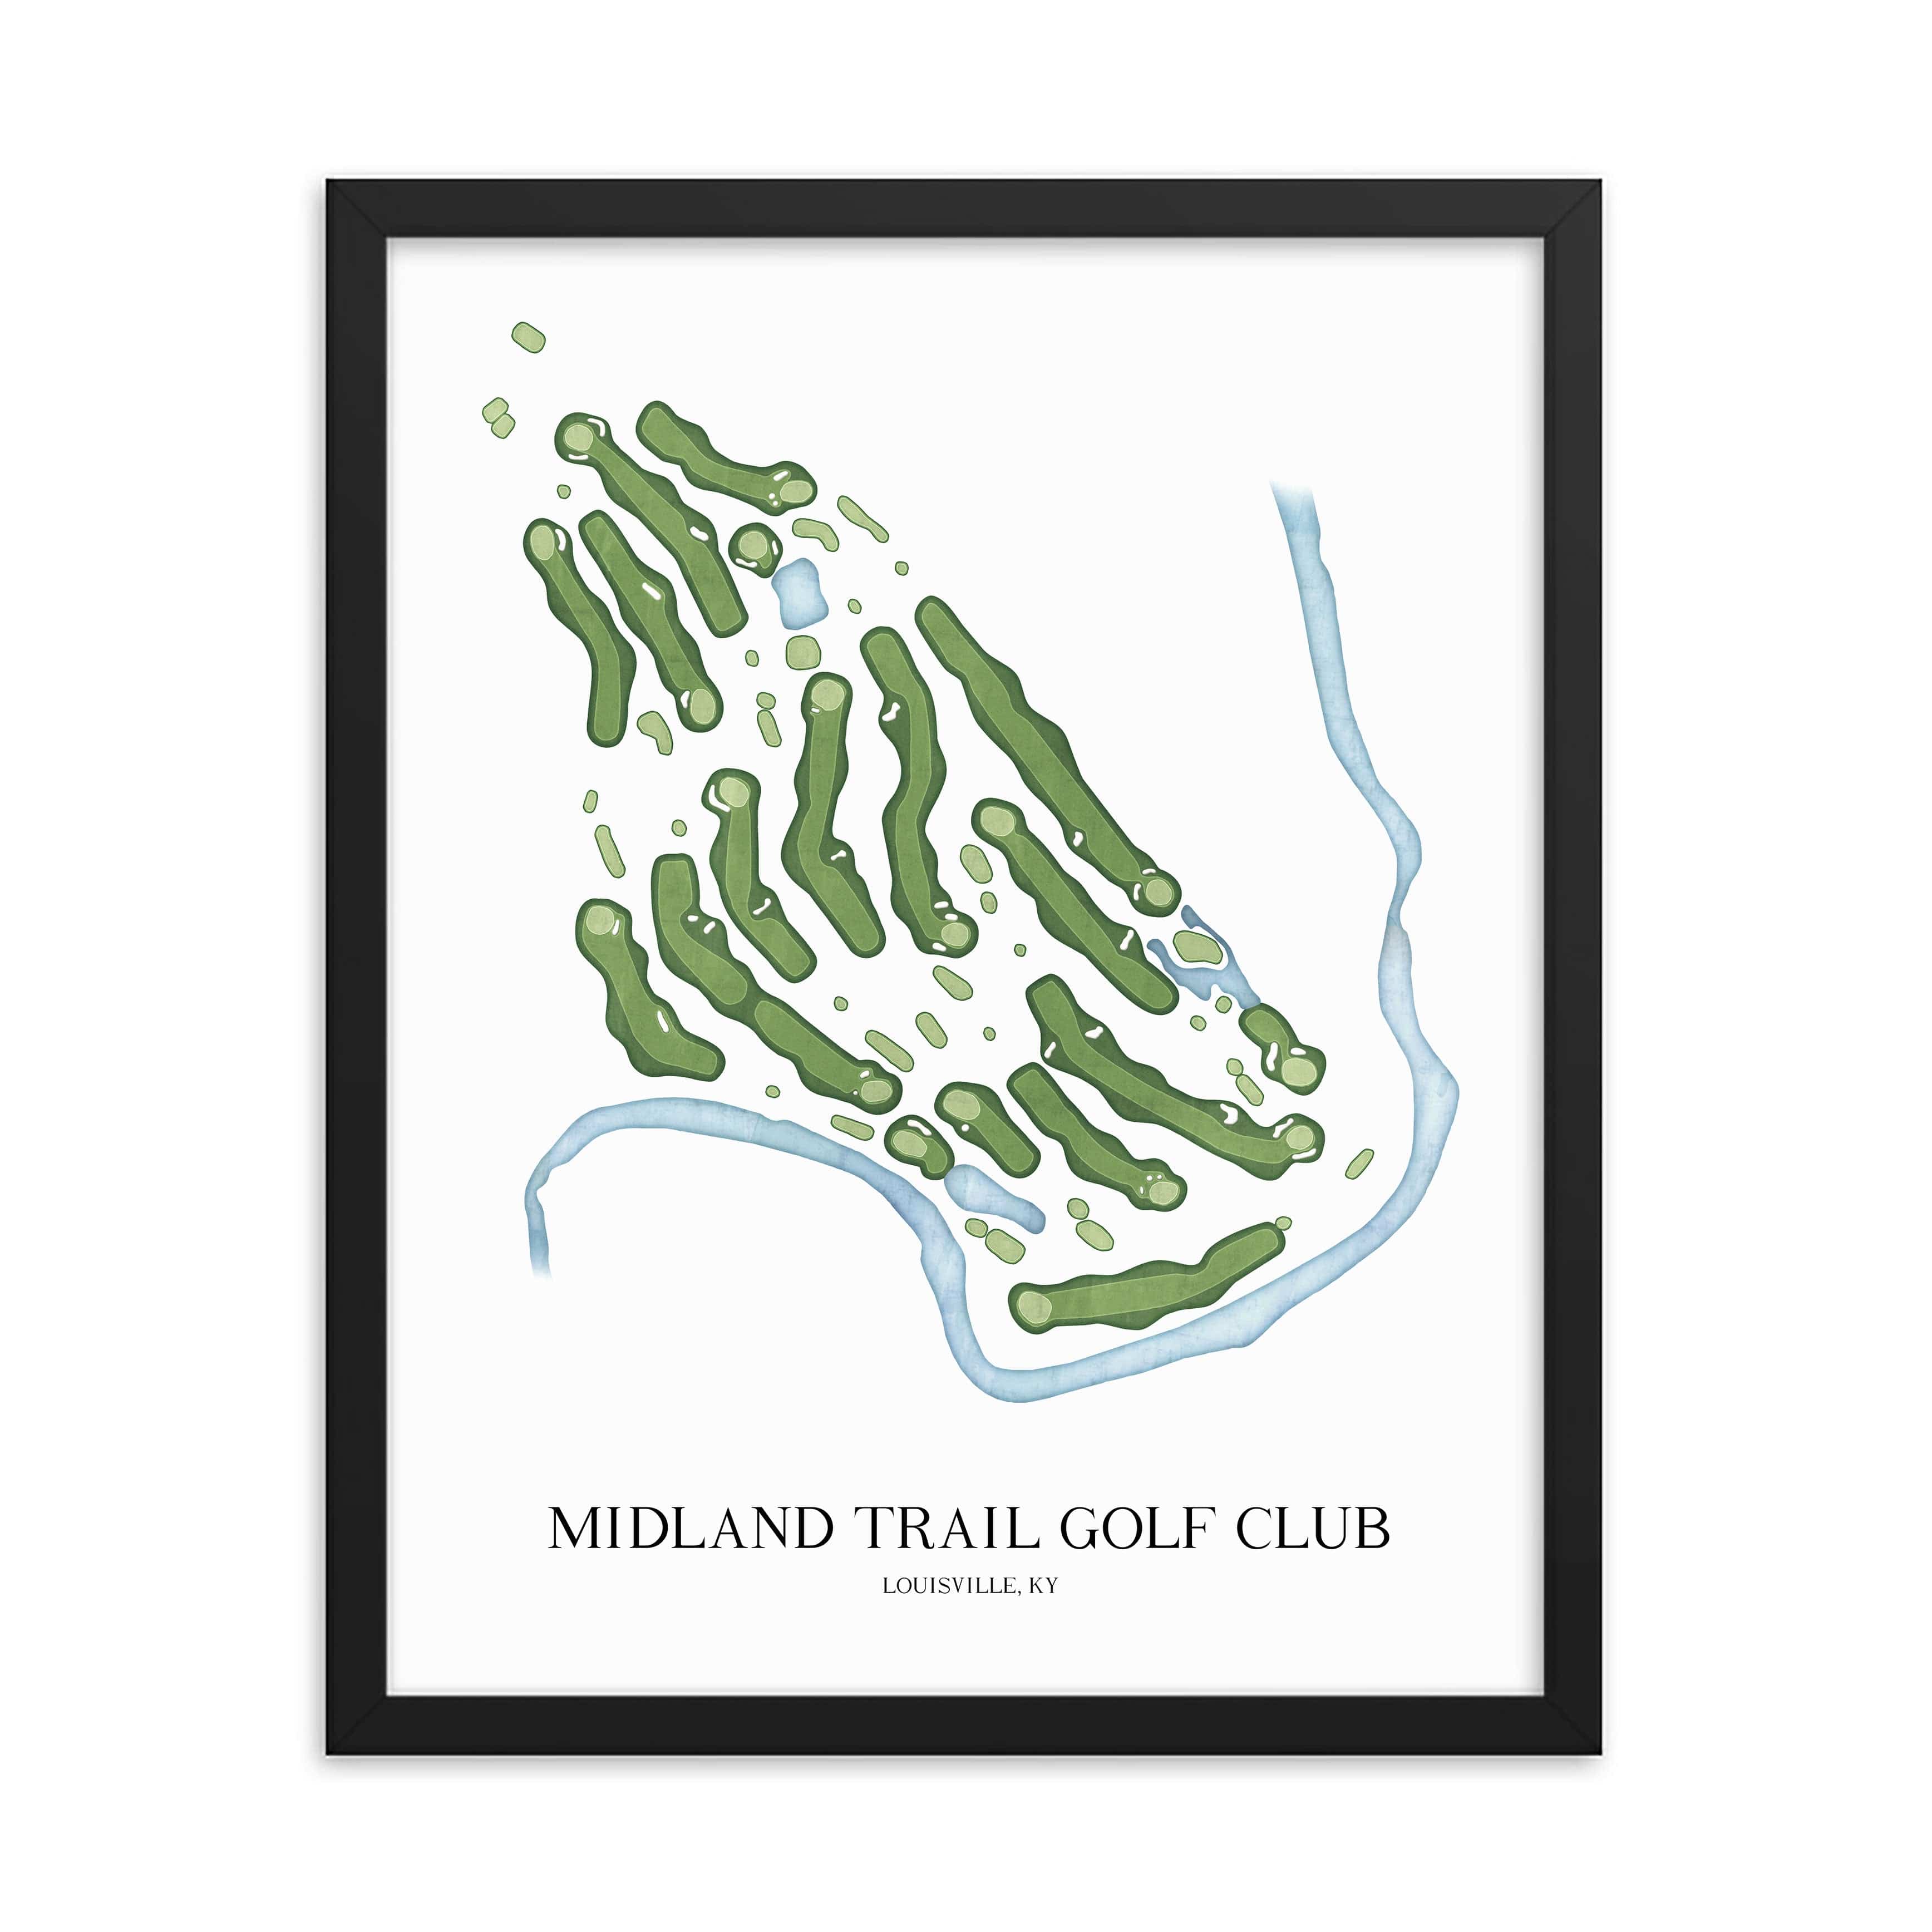 The 19th Hole Golf Shop - Golf Course Prints -  Midland Trail Golf Club Golf Course Map